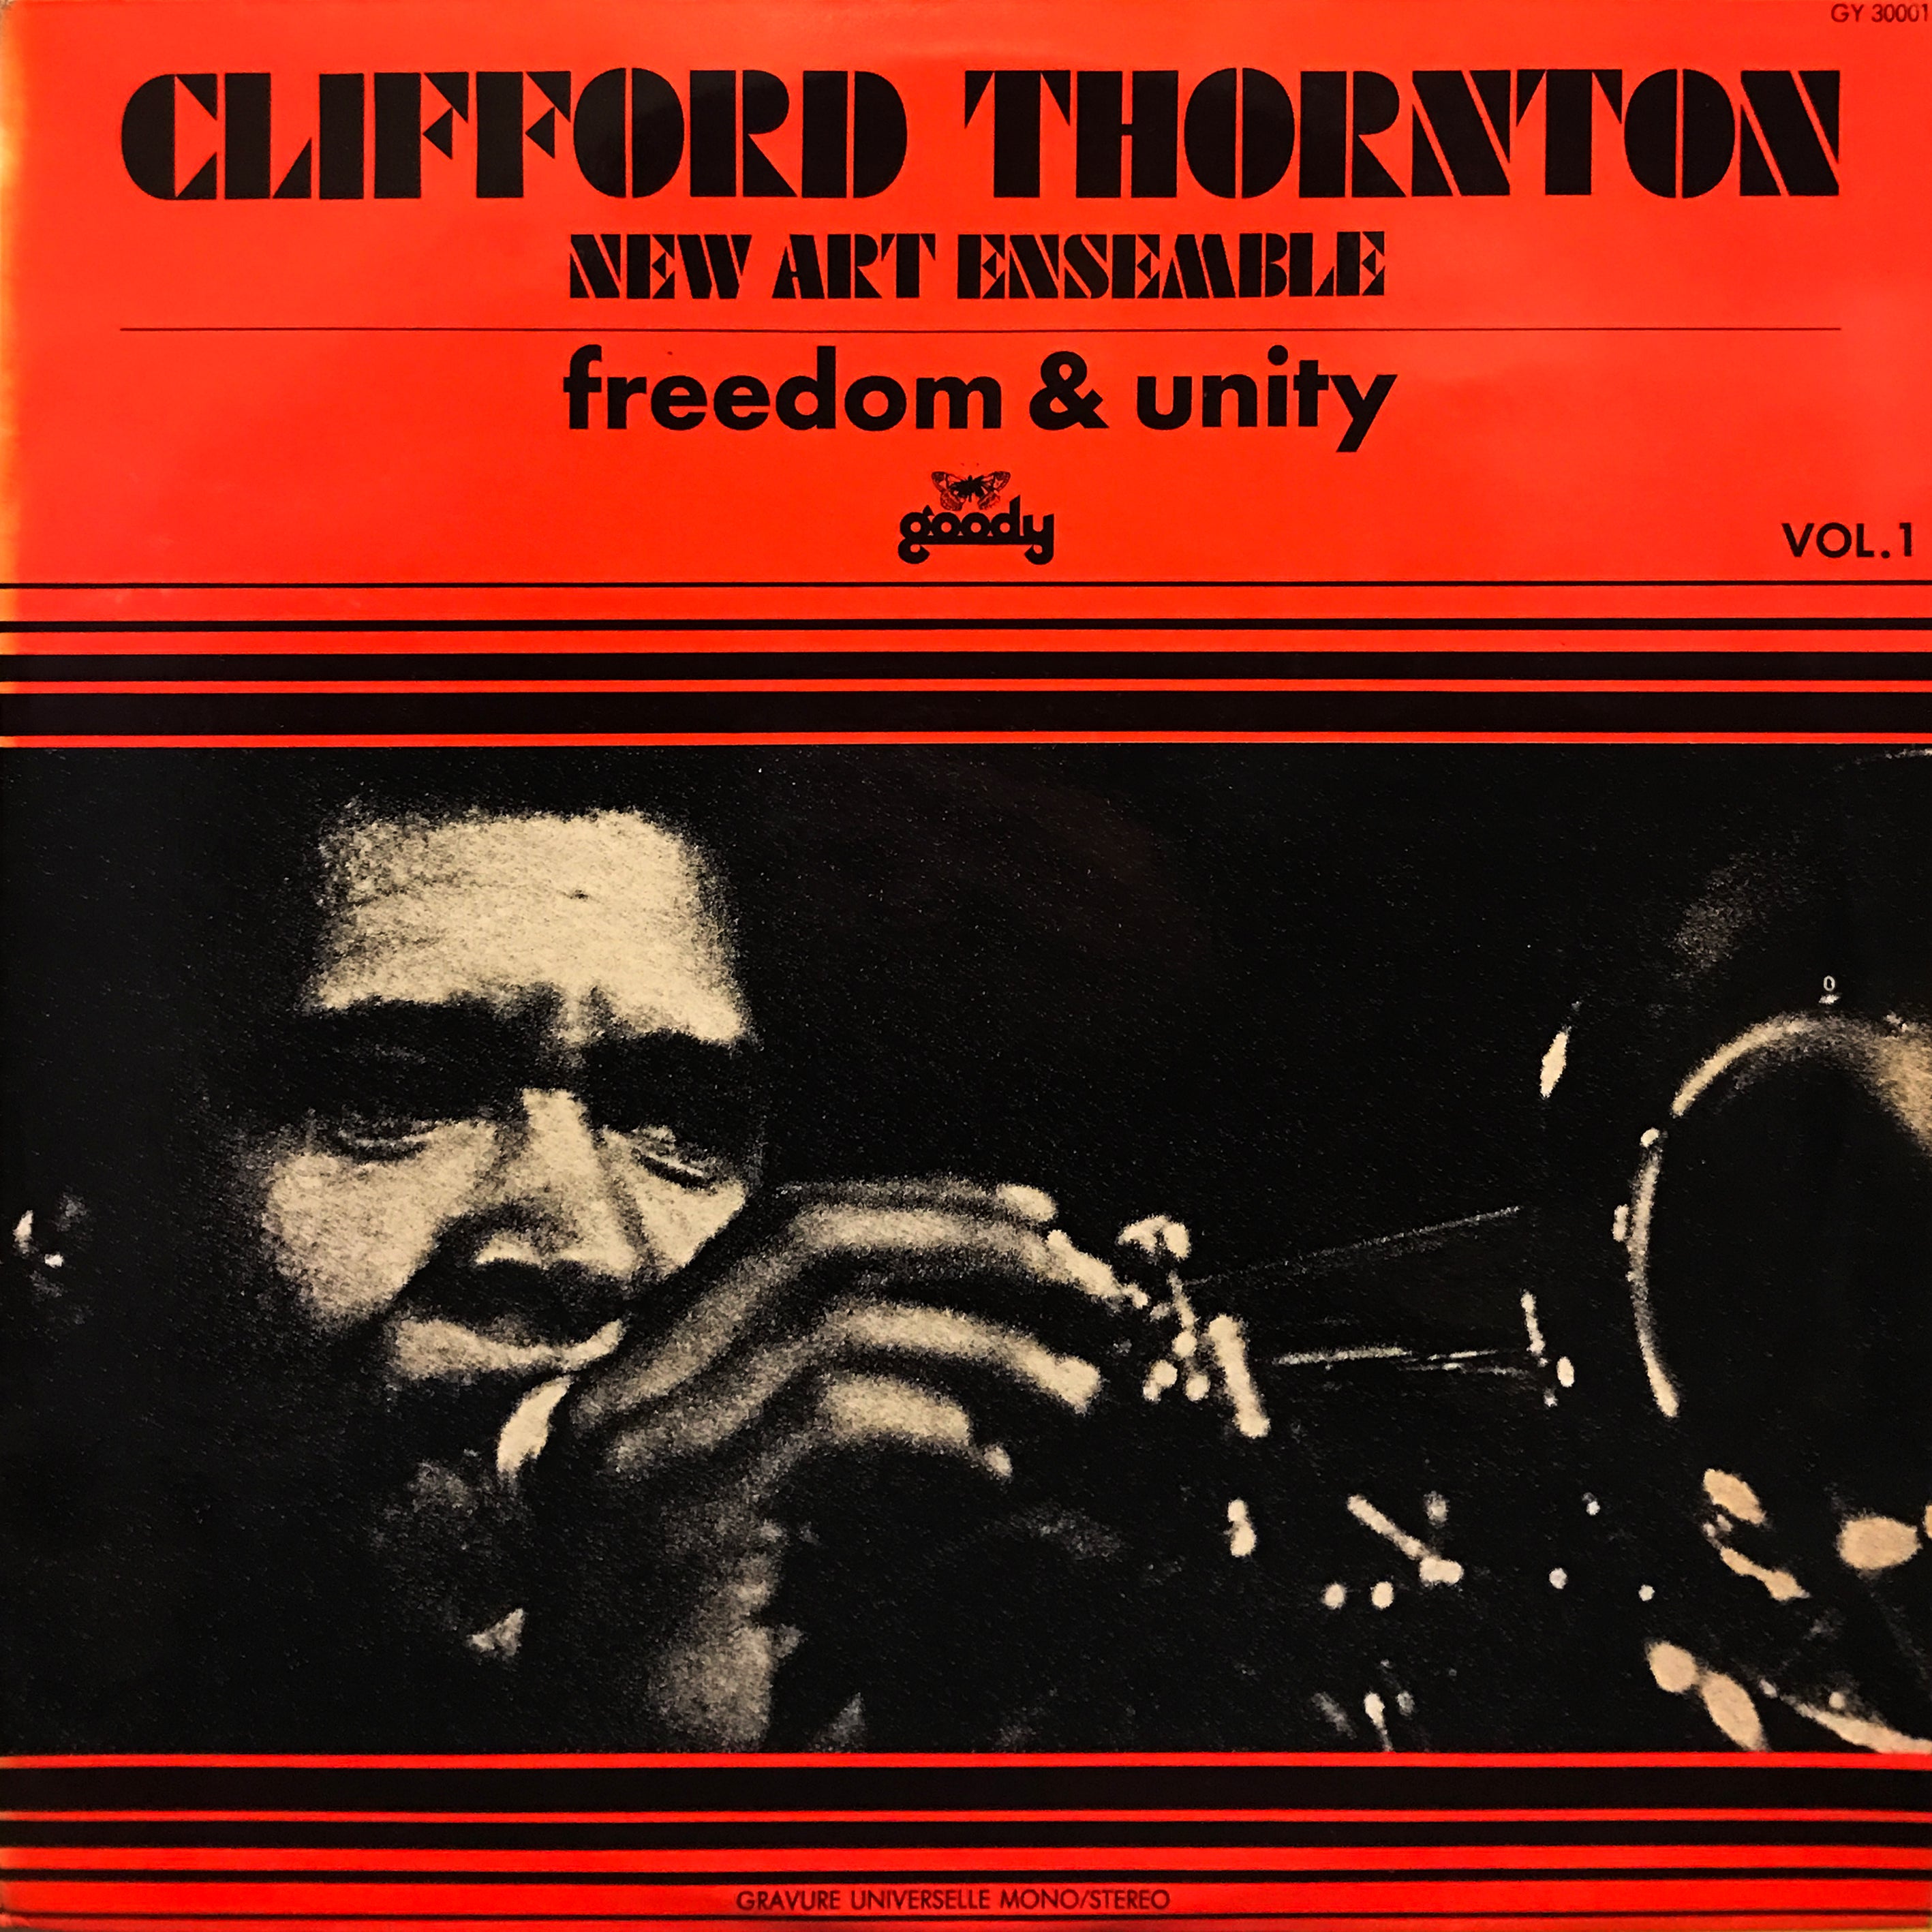 Clifford Thornton New Art Ensemble “Freedom & Unity Vol. 1”